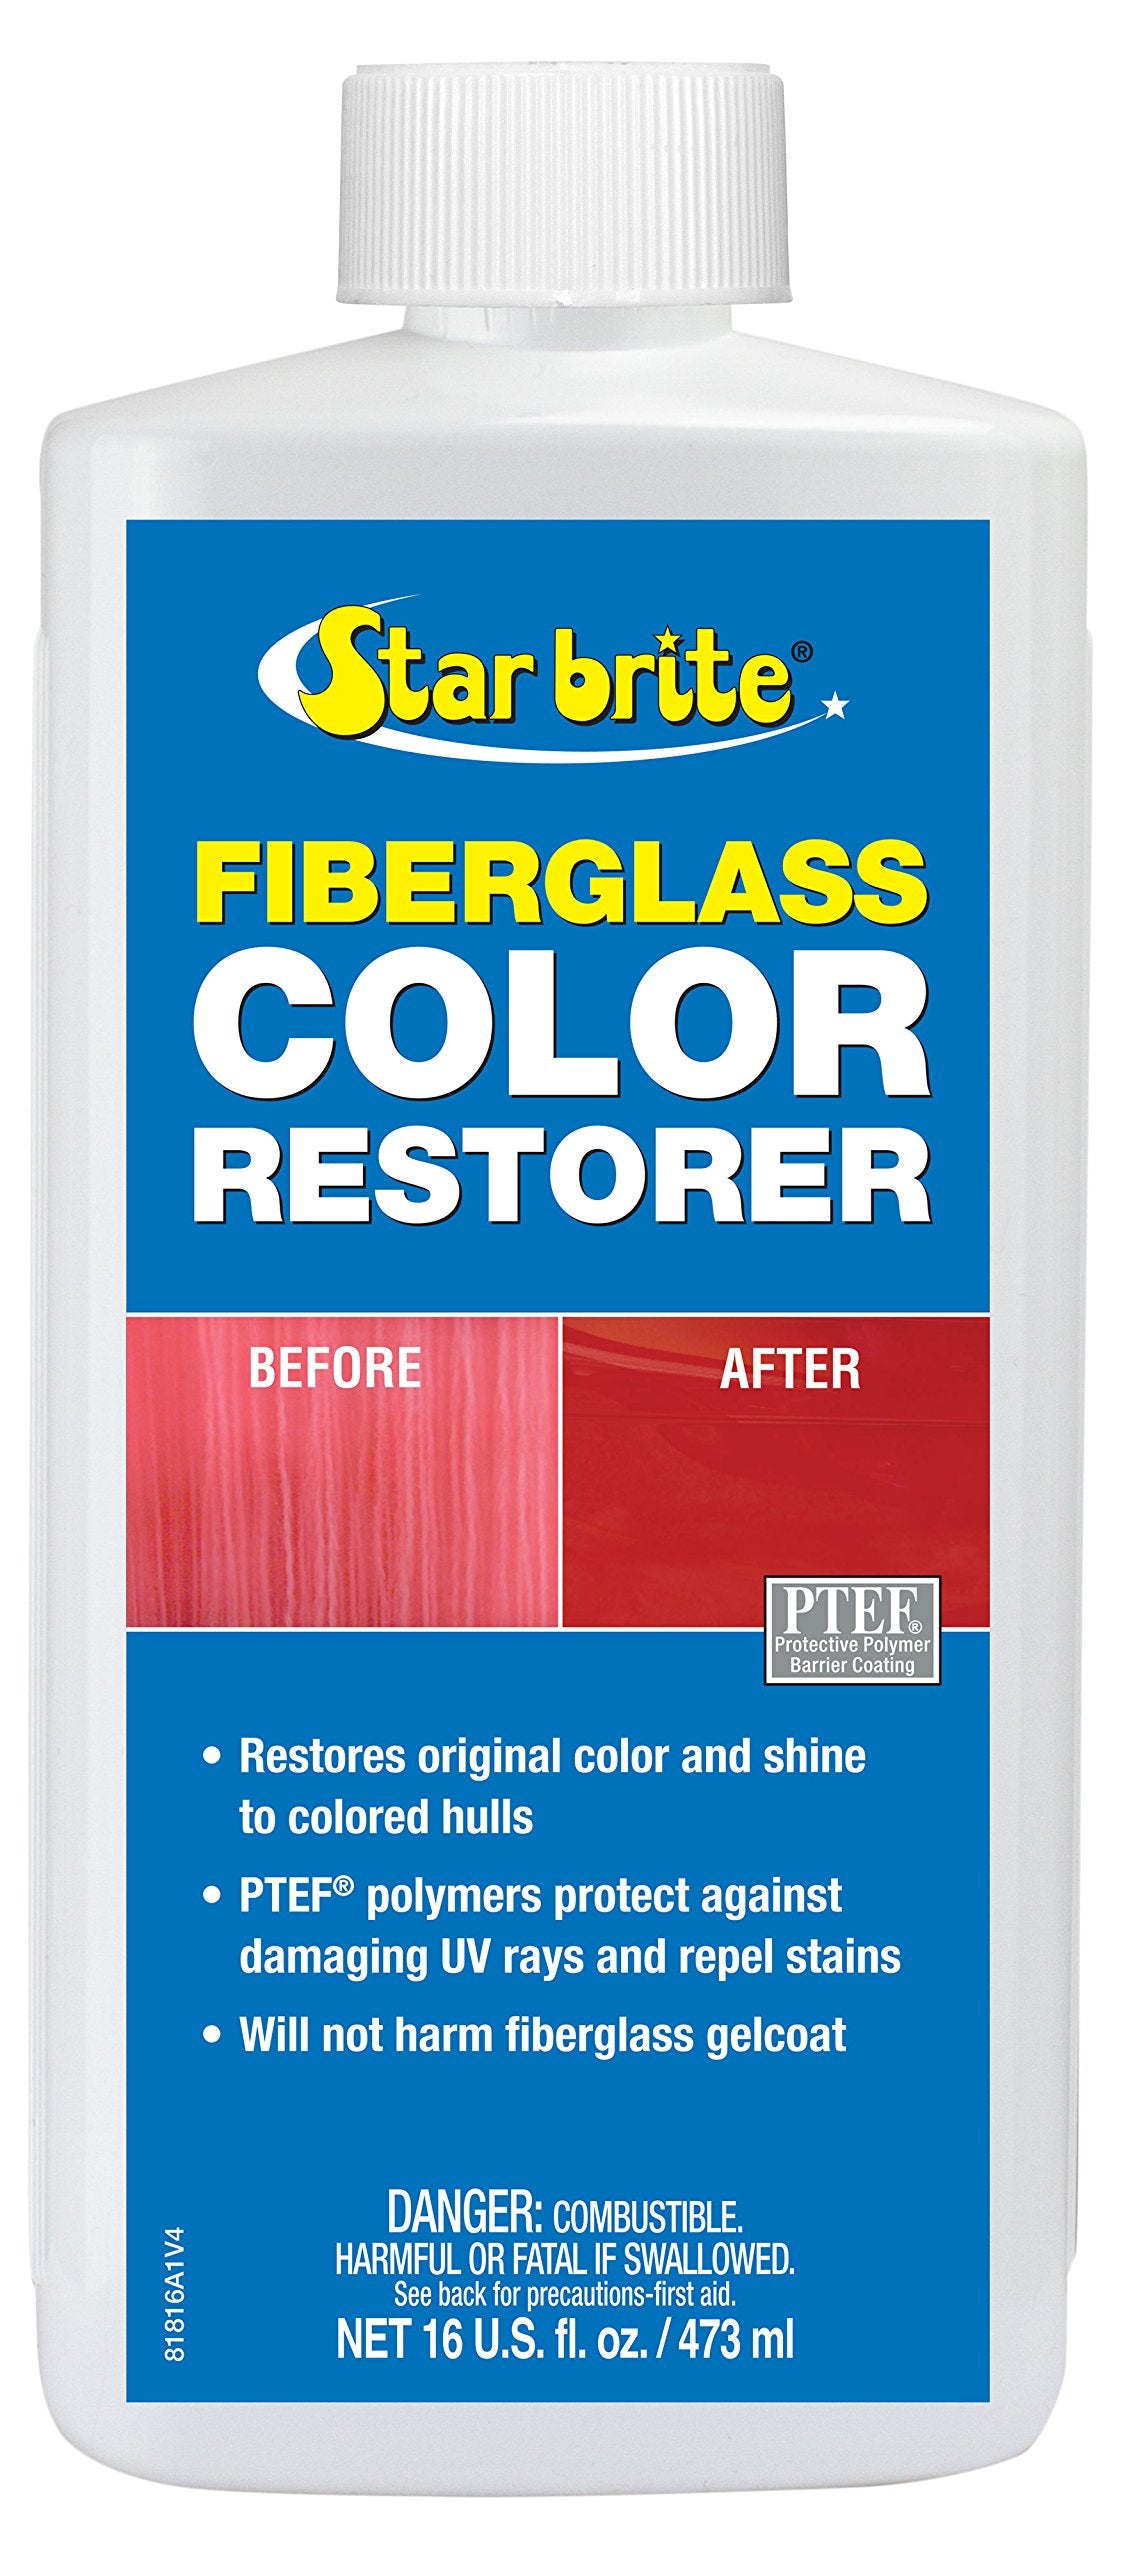 Starbrite Fiberglass Color Restorer w/PTEF 16oz 81816